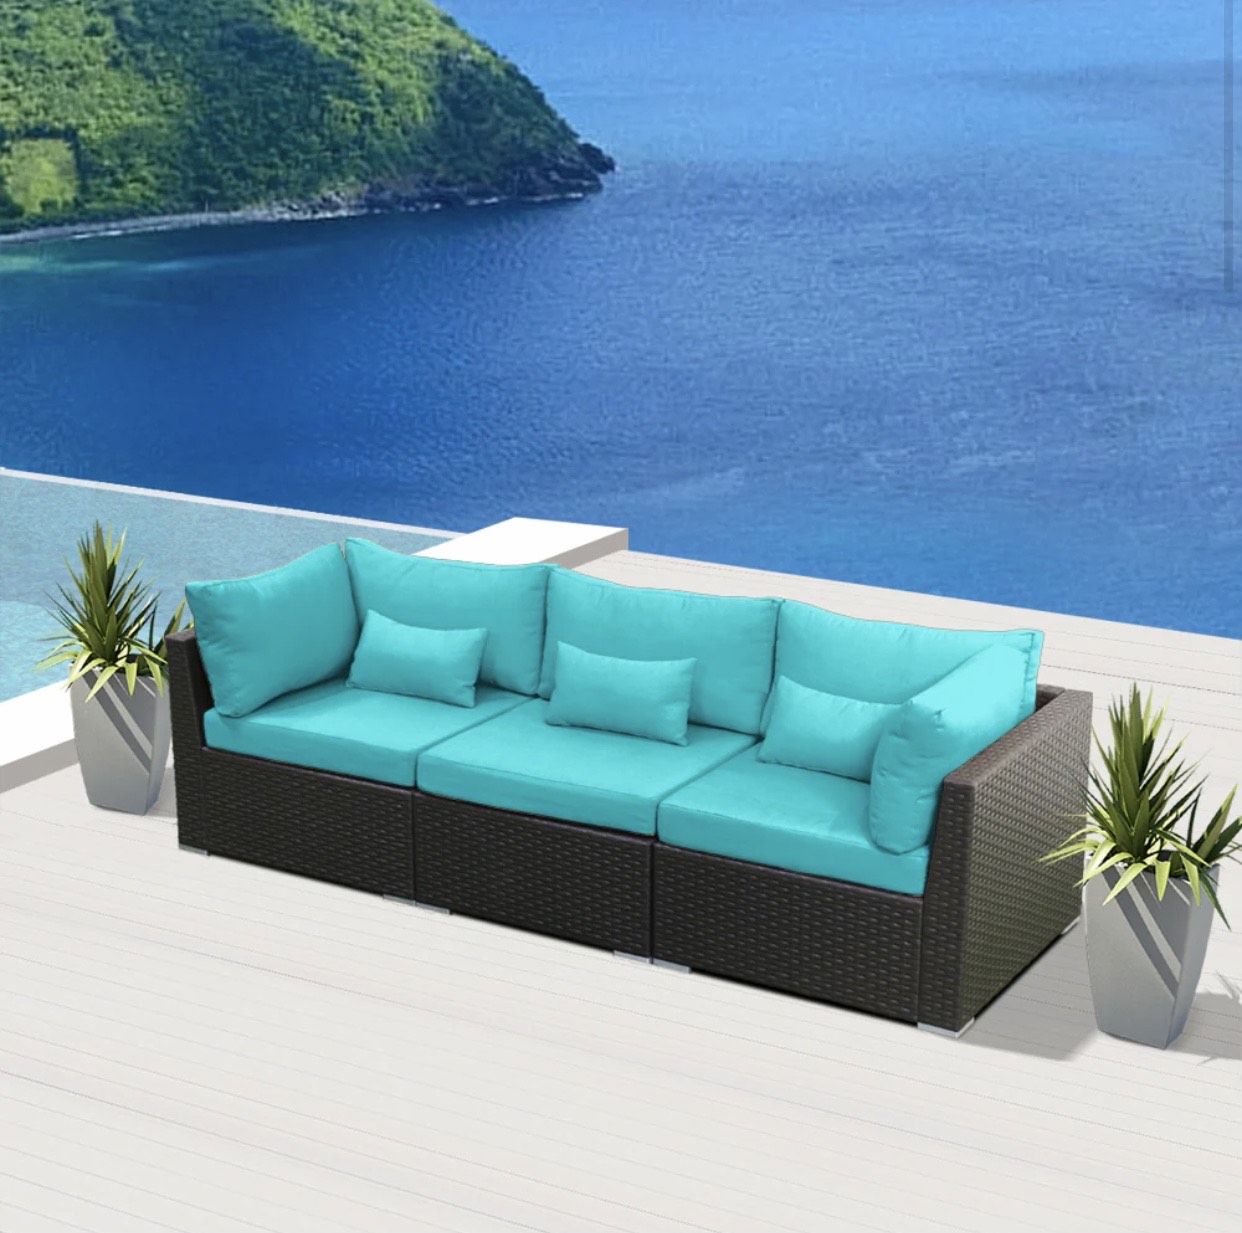 Blue Turquoise Outdoor Modern Patio Wicker Furniture Sofa Set Sunset Beach 3 Three Piece